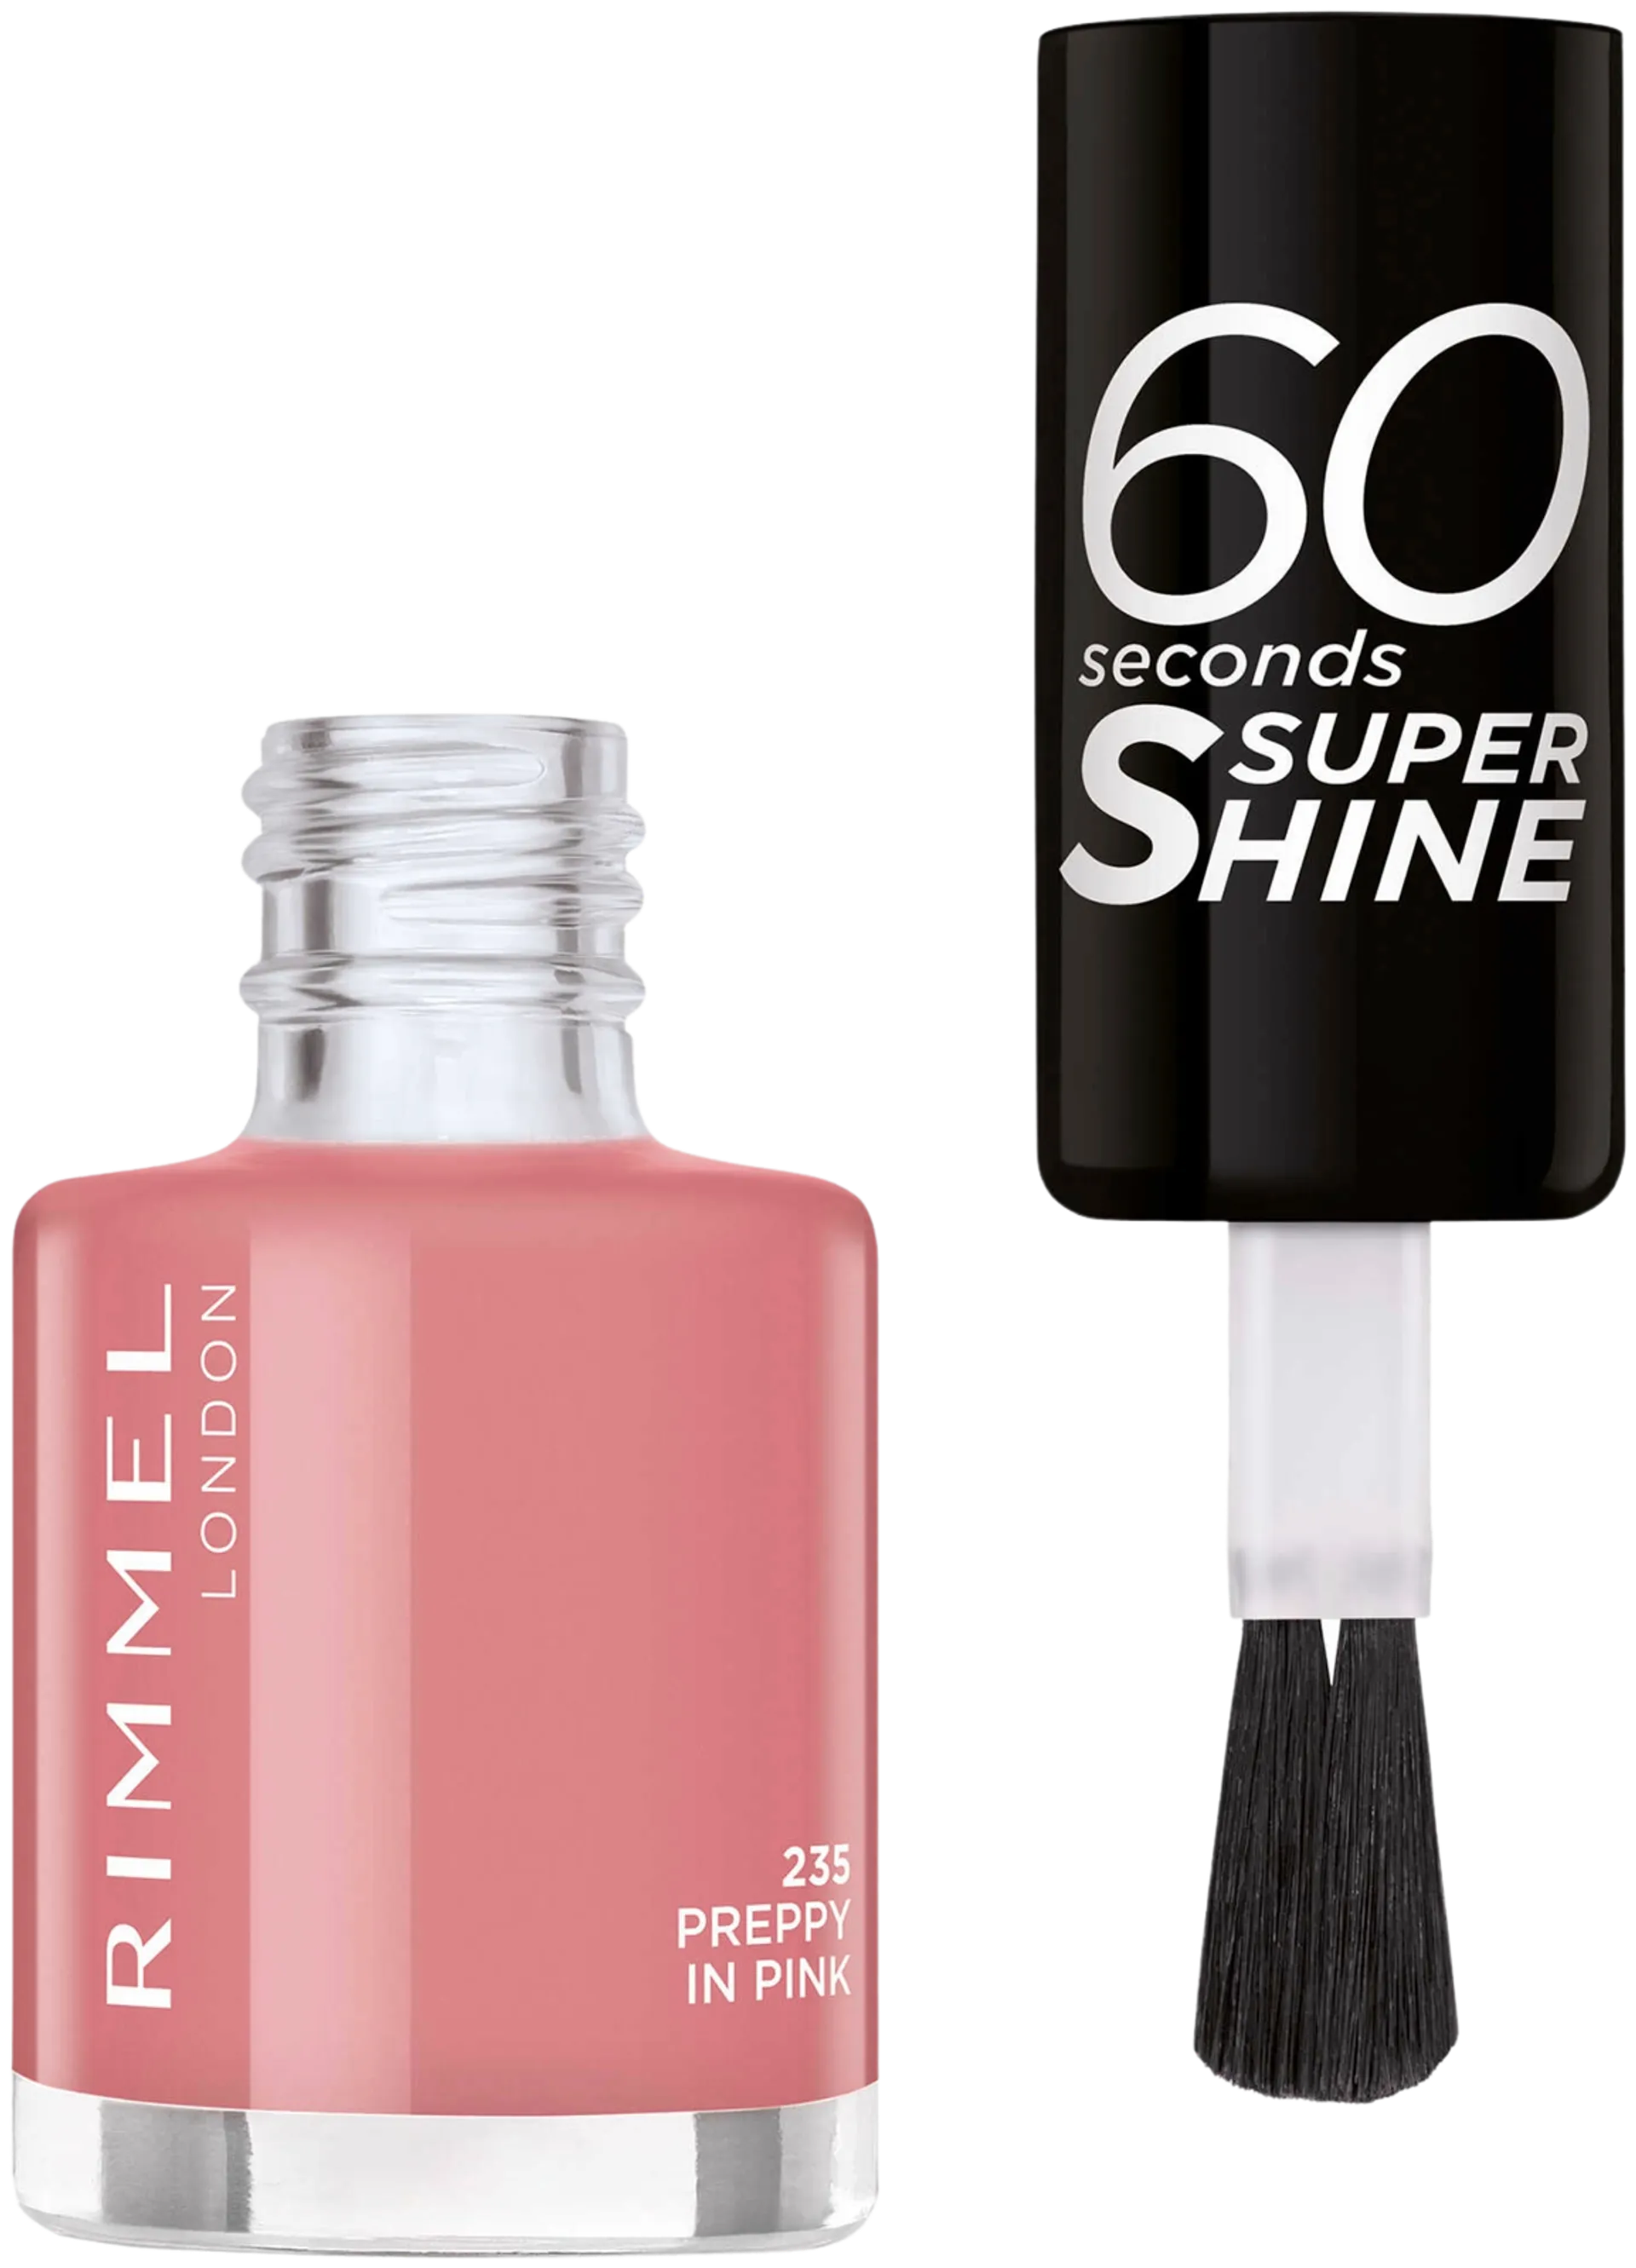 Rimmel 60 Seconds Super Shine kynsilakka 8ml, 235 Preppy in Pink - 2